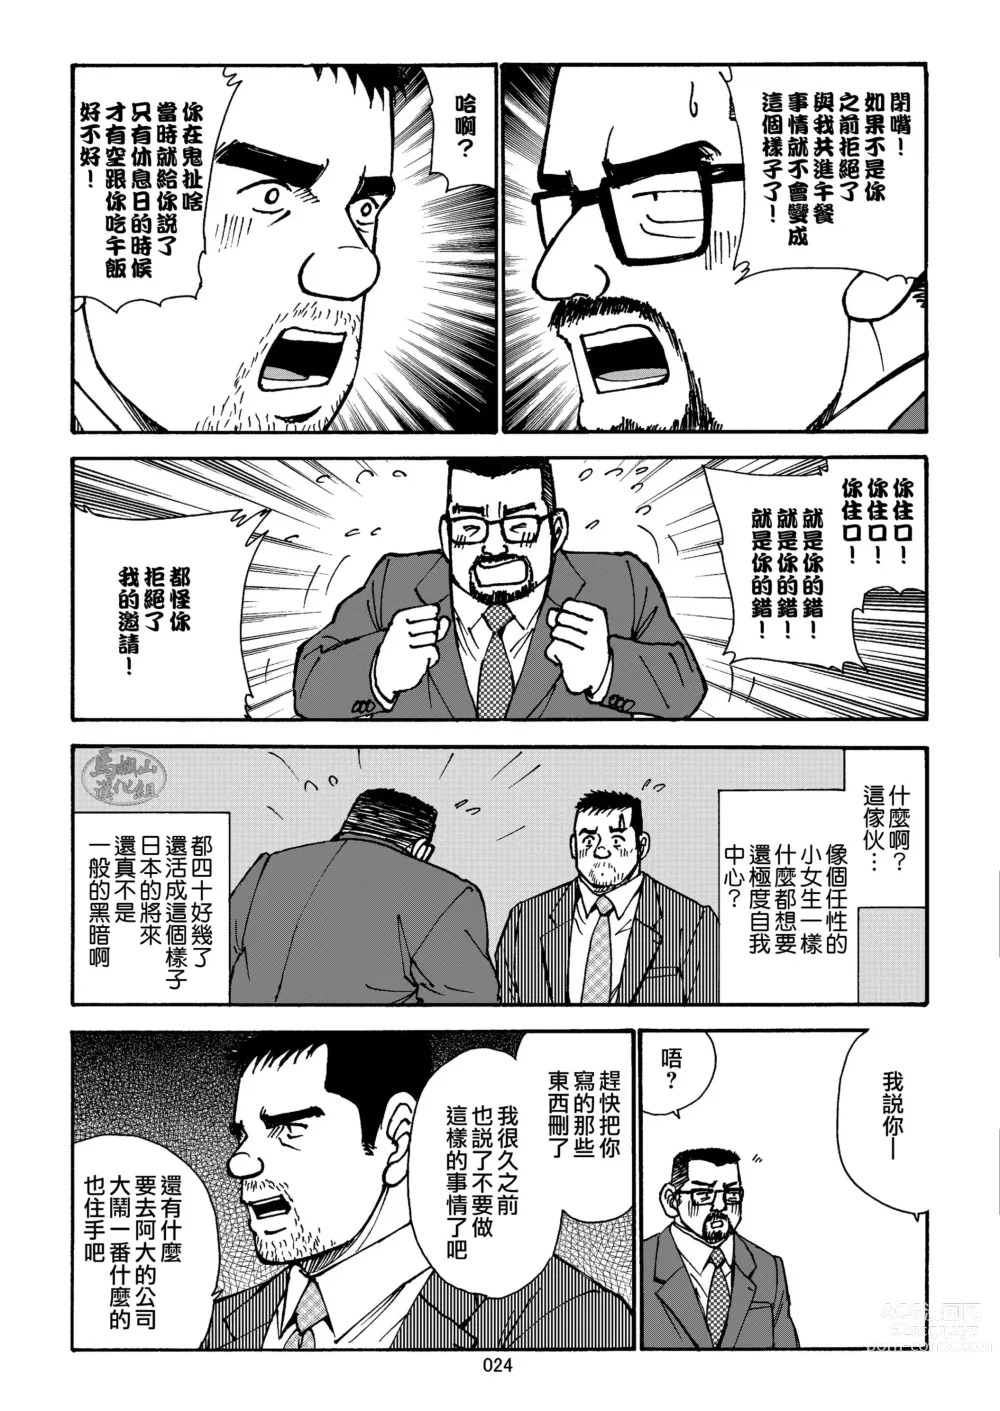 Page 24 of manga おいしい性活